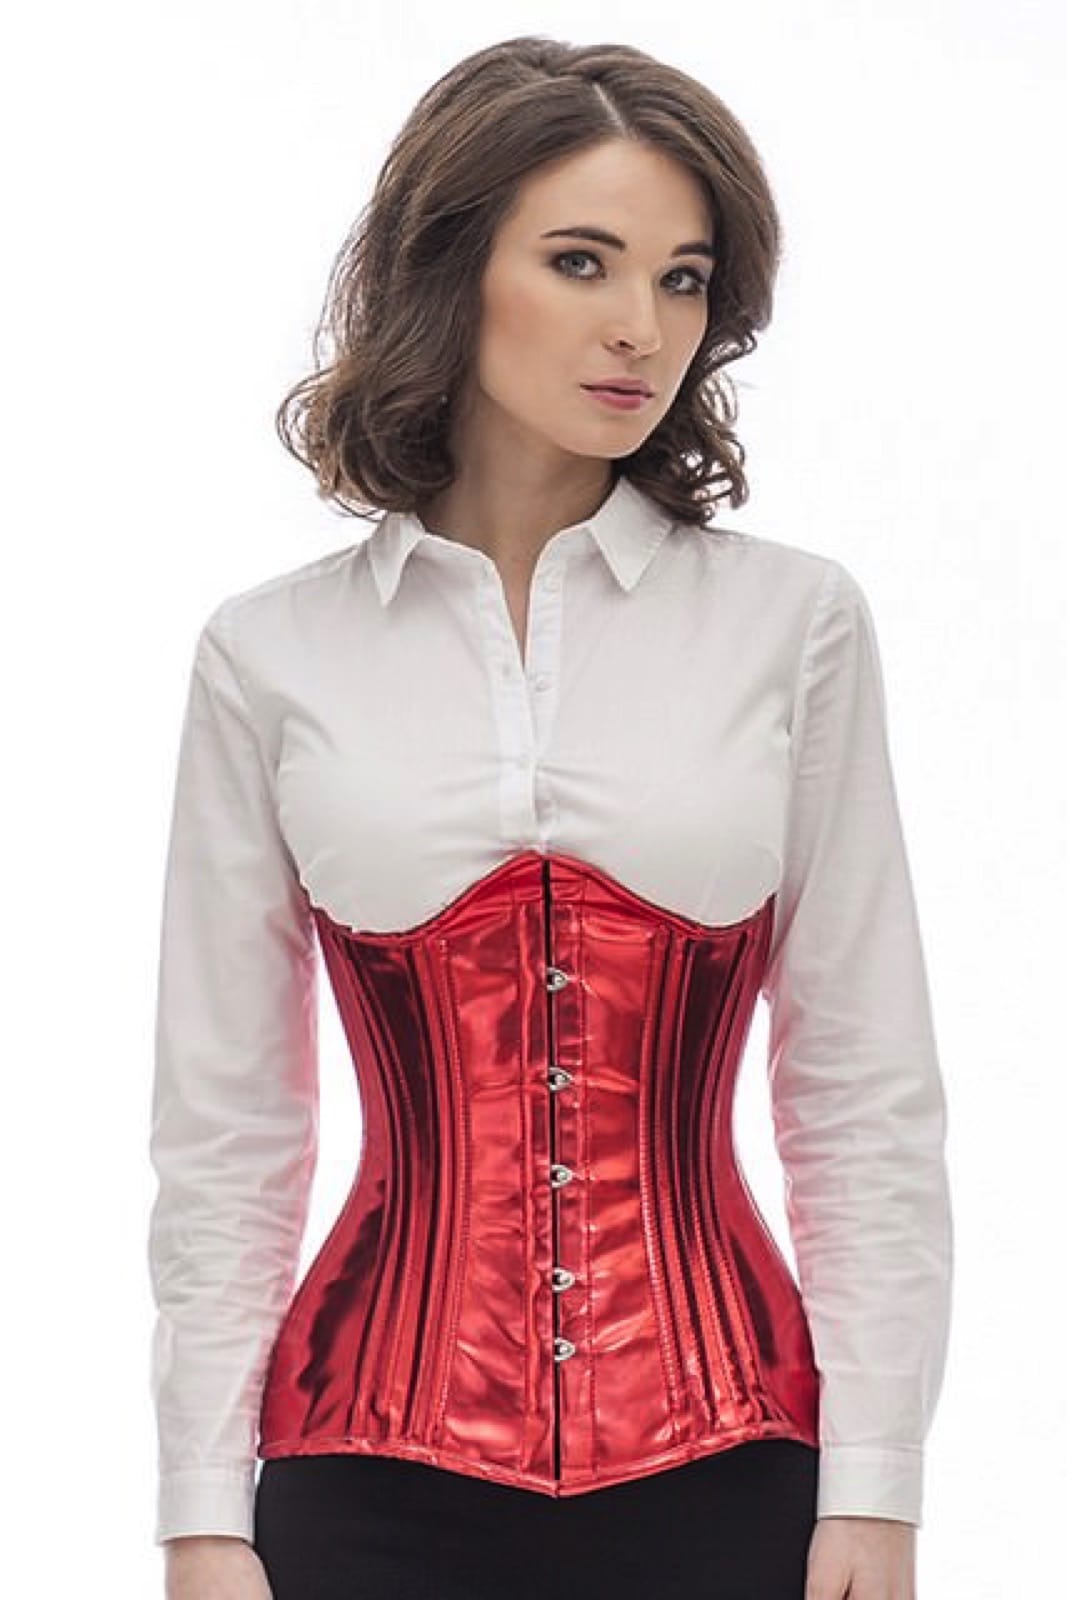 Lak corset rood glitter onderborst rond gevormd Korset pnG1